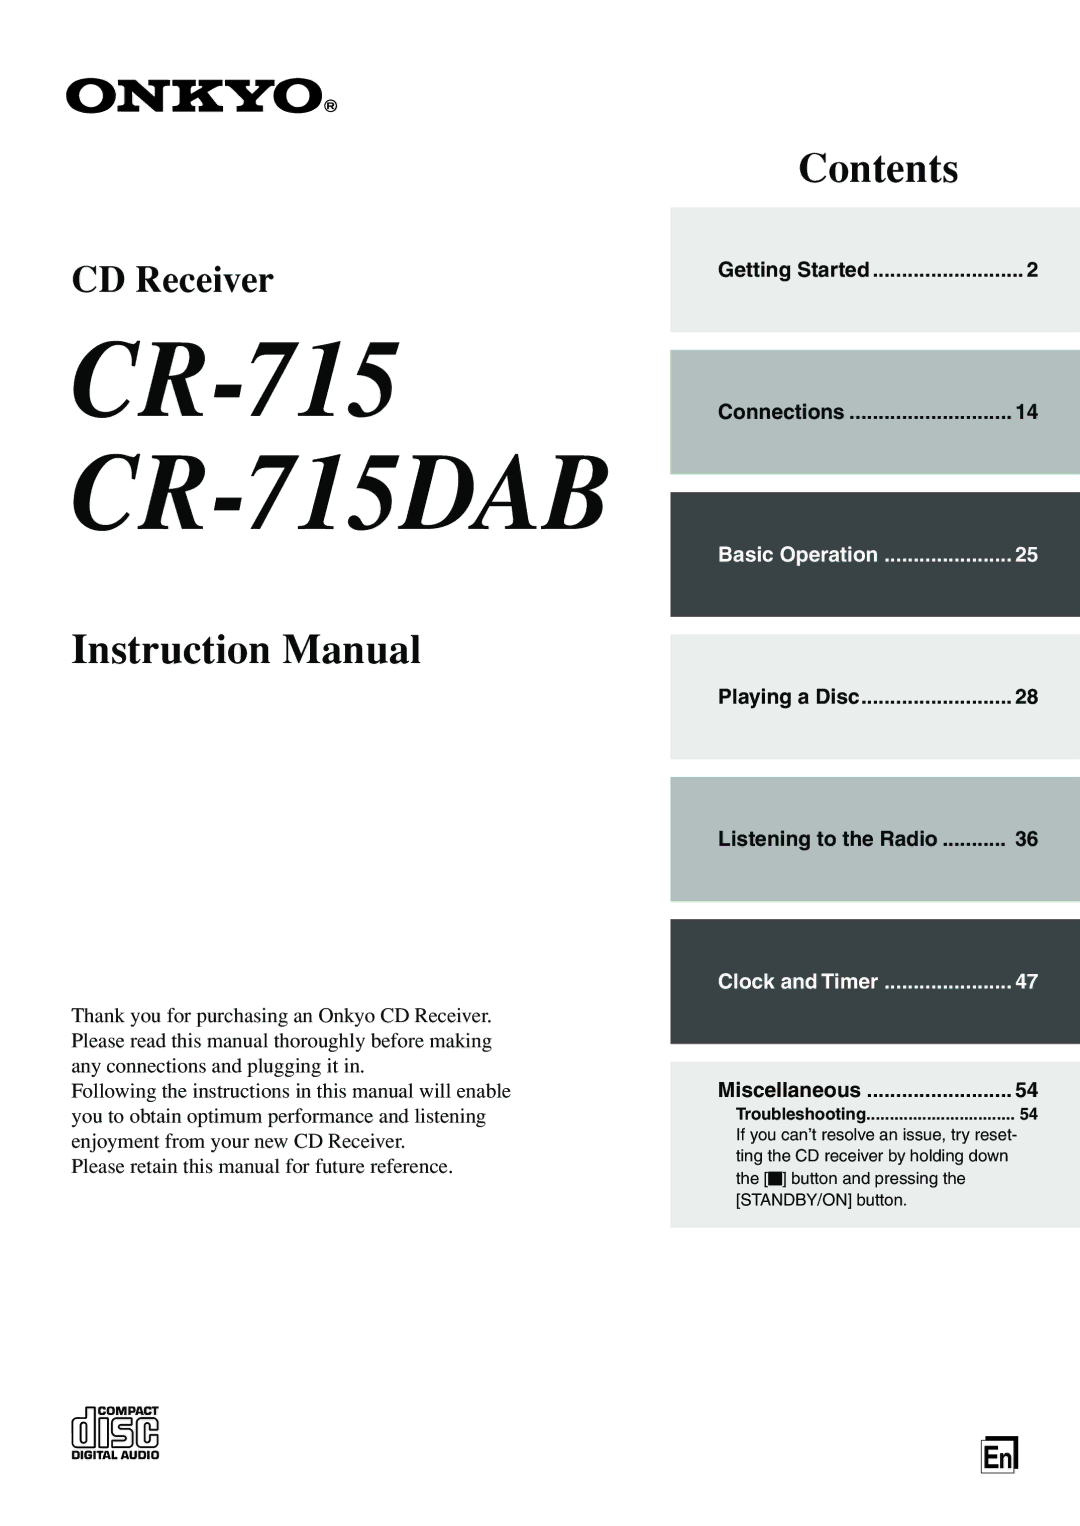 Onkyo instruction manual CR-715 CR-715DAB 